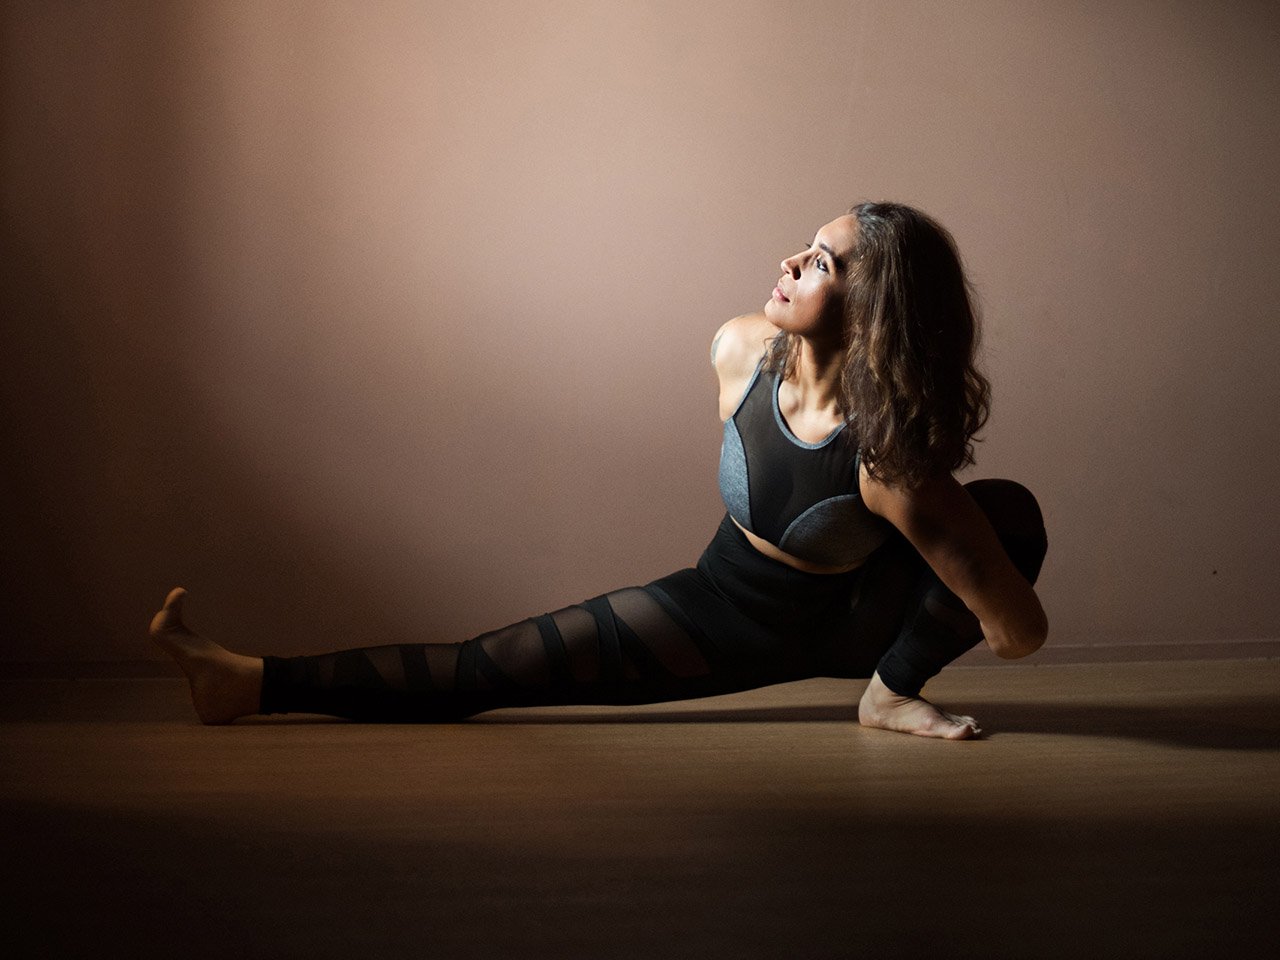 Woman-doing-yoga-photo-via-Nappy-1280x960.jpg